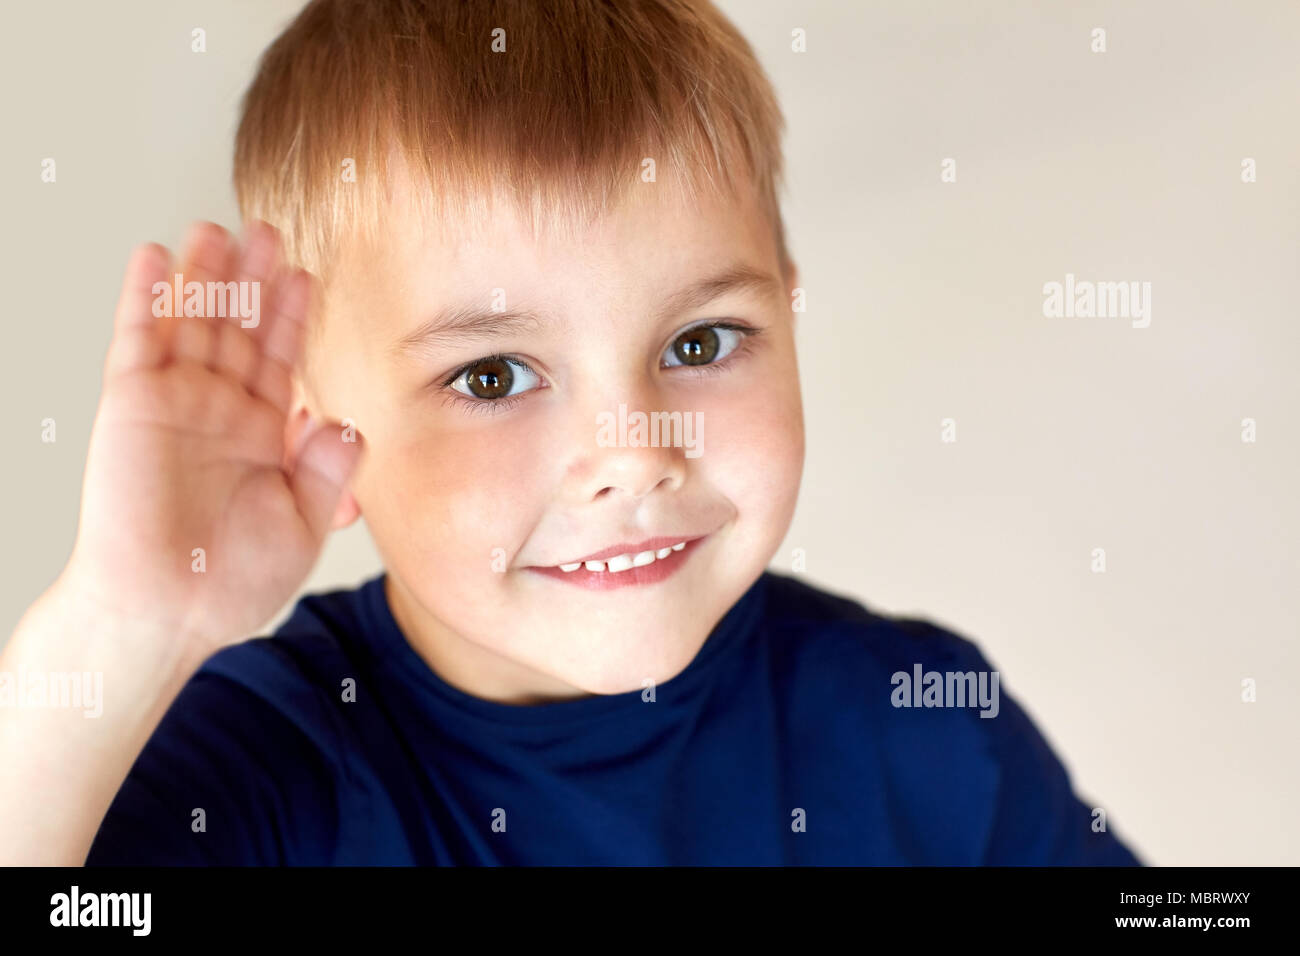 portrait of happy smiling little boy waving hand Stock Photo